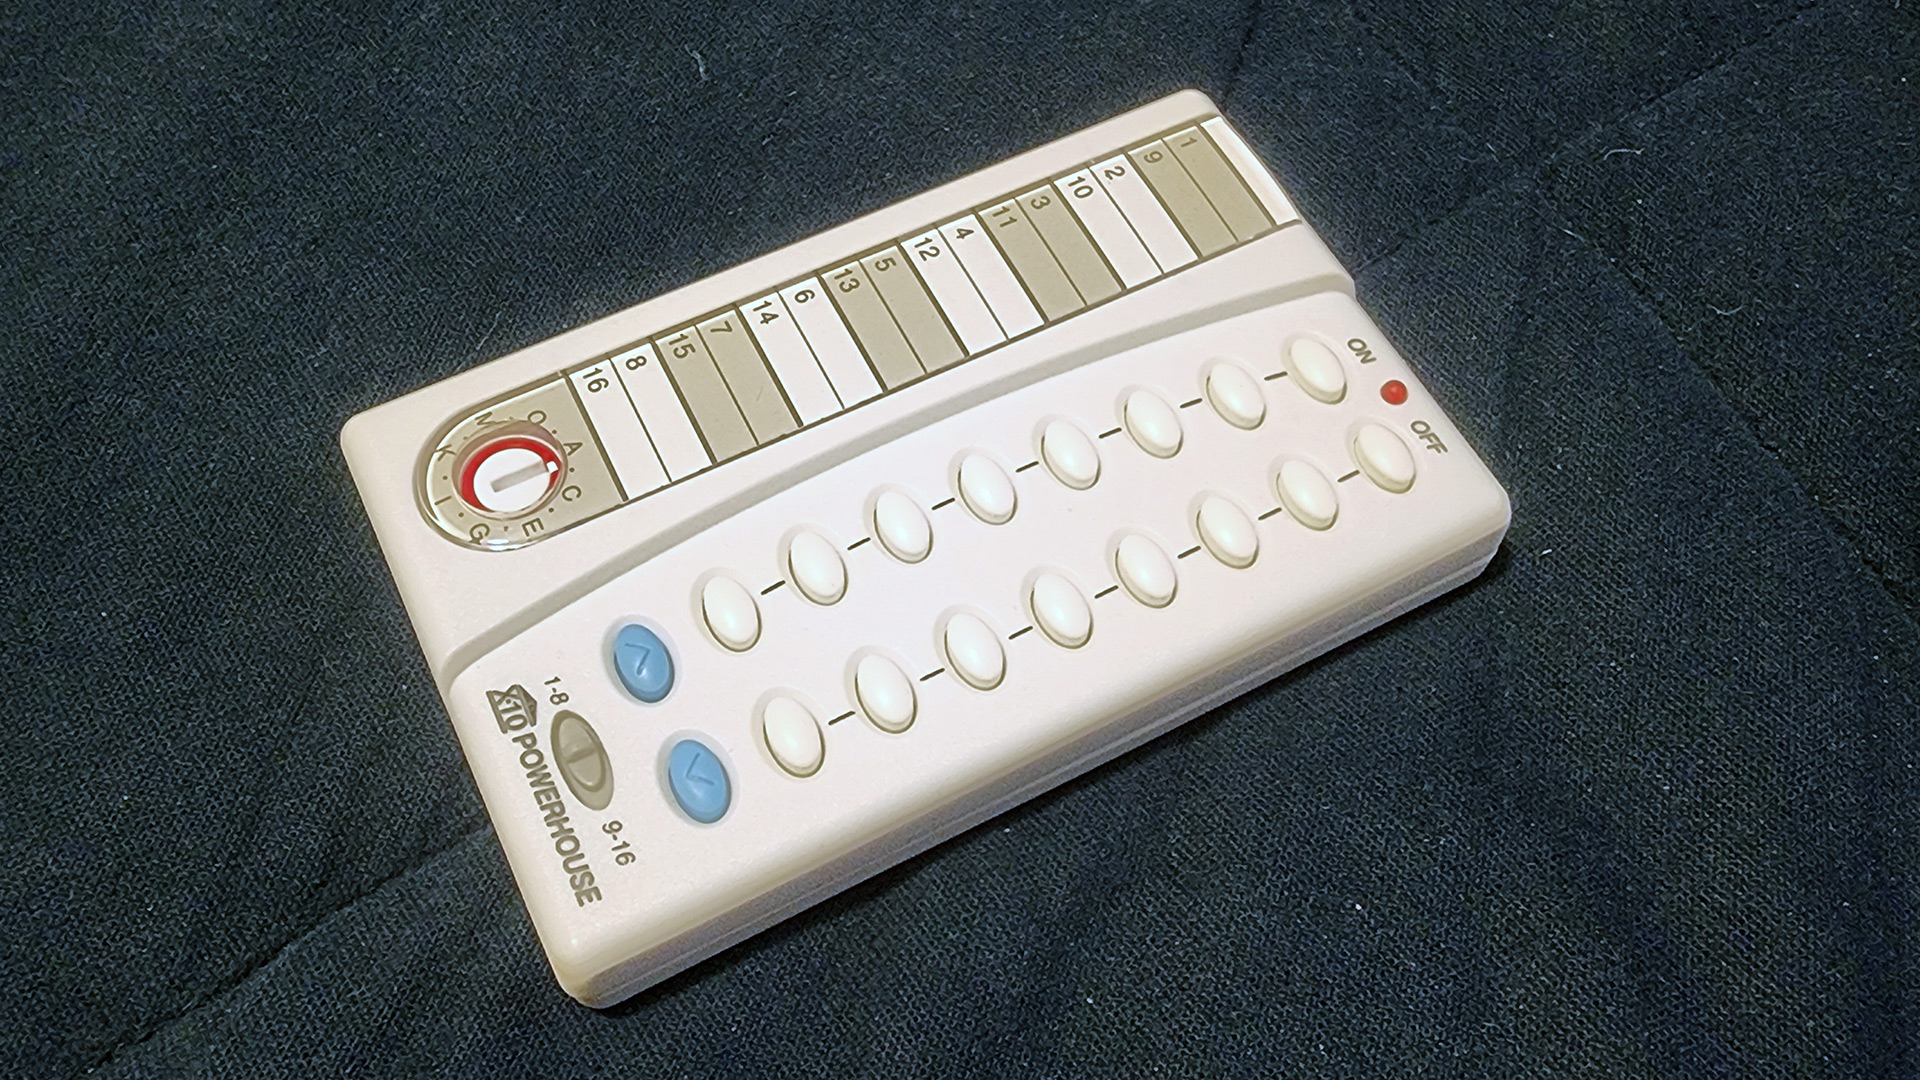 HR12A PalmPad Remote Control –